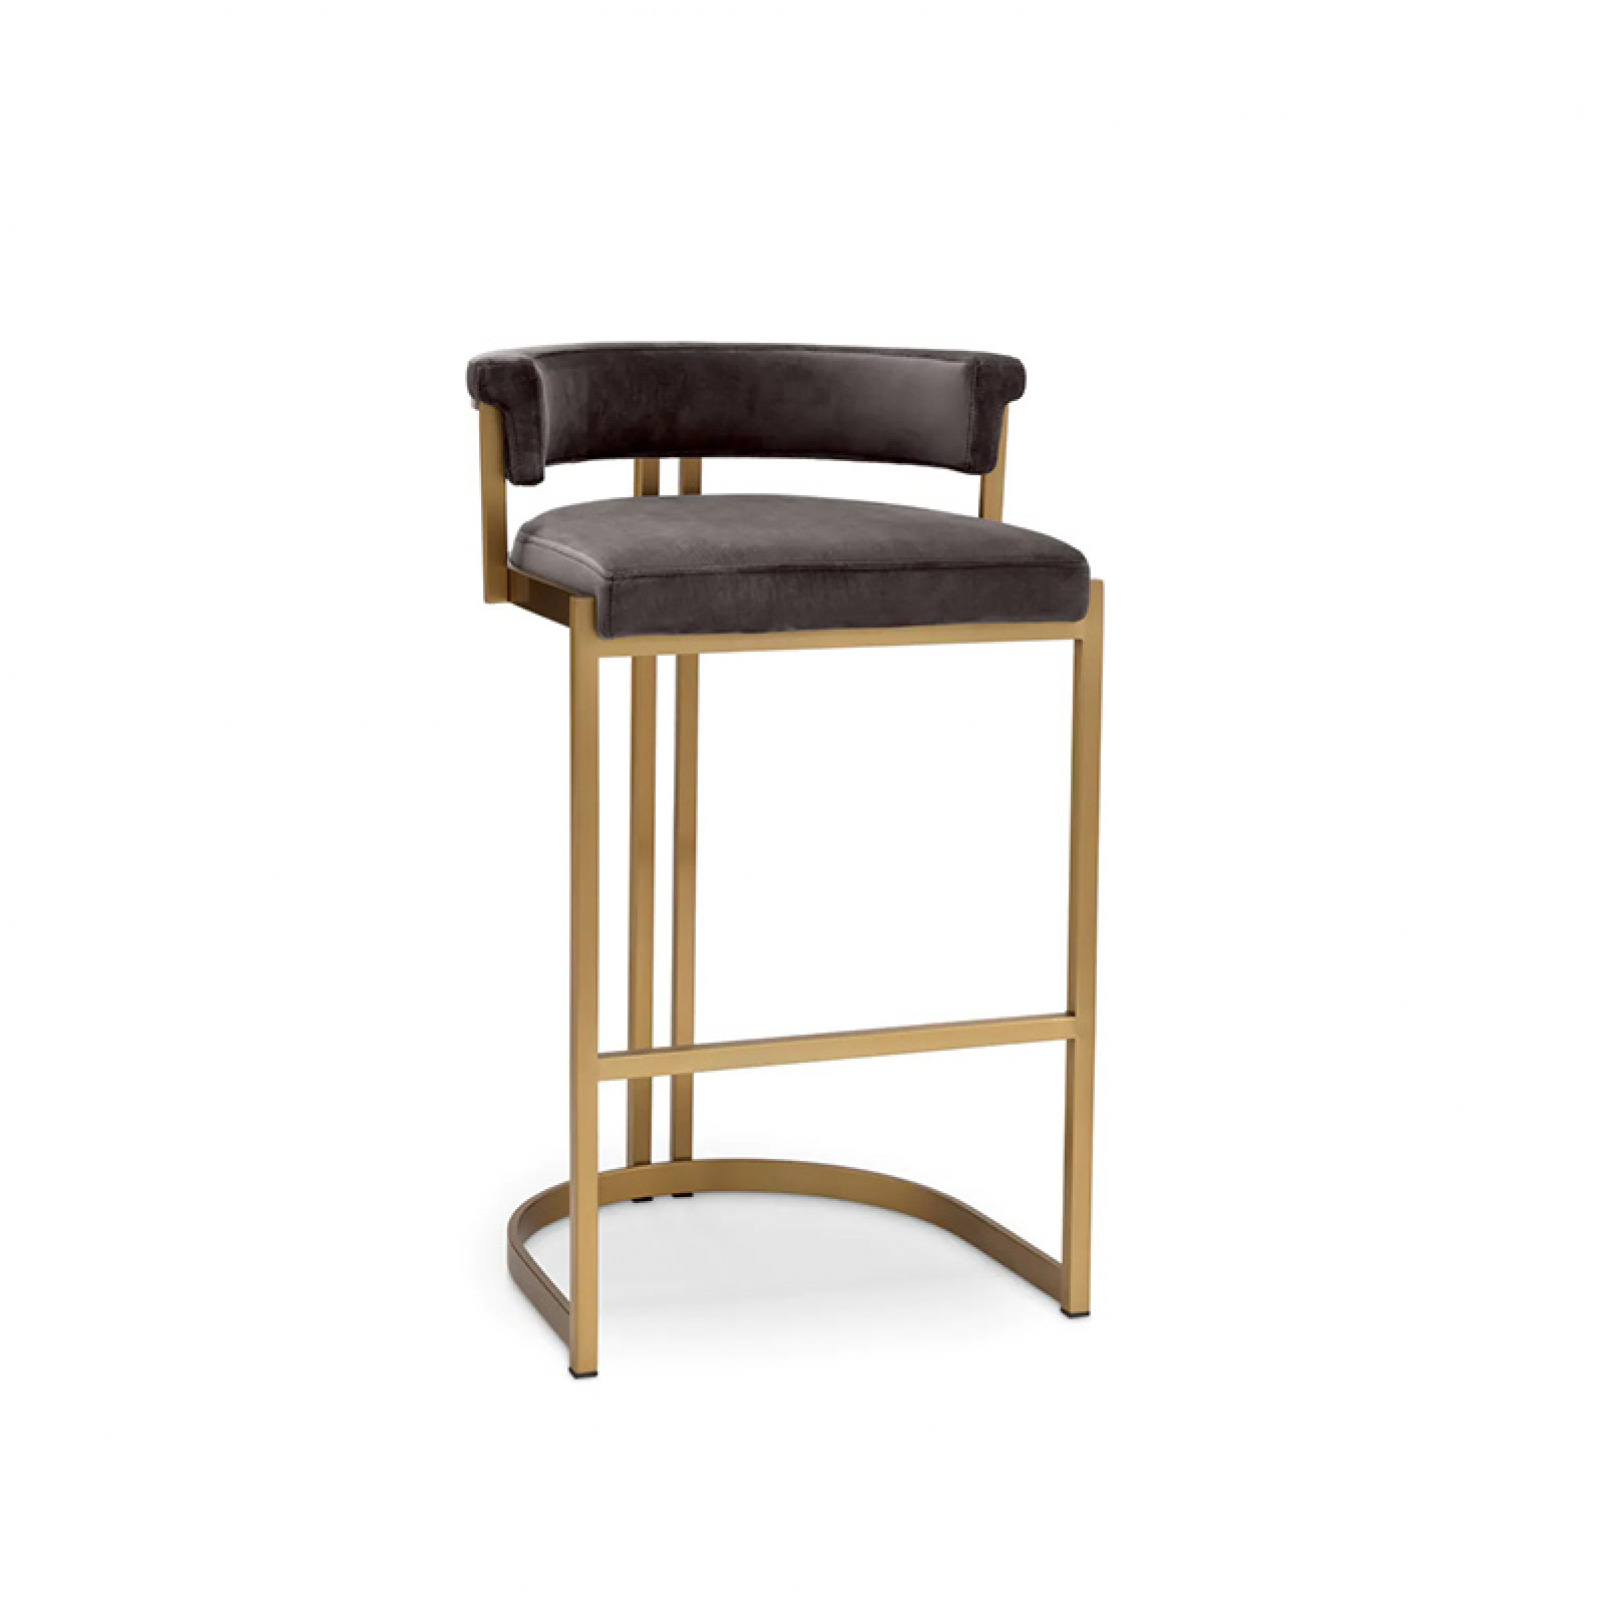 Dante bronze bar stool